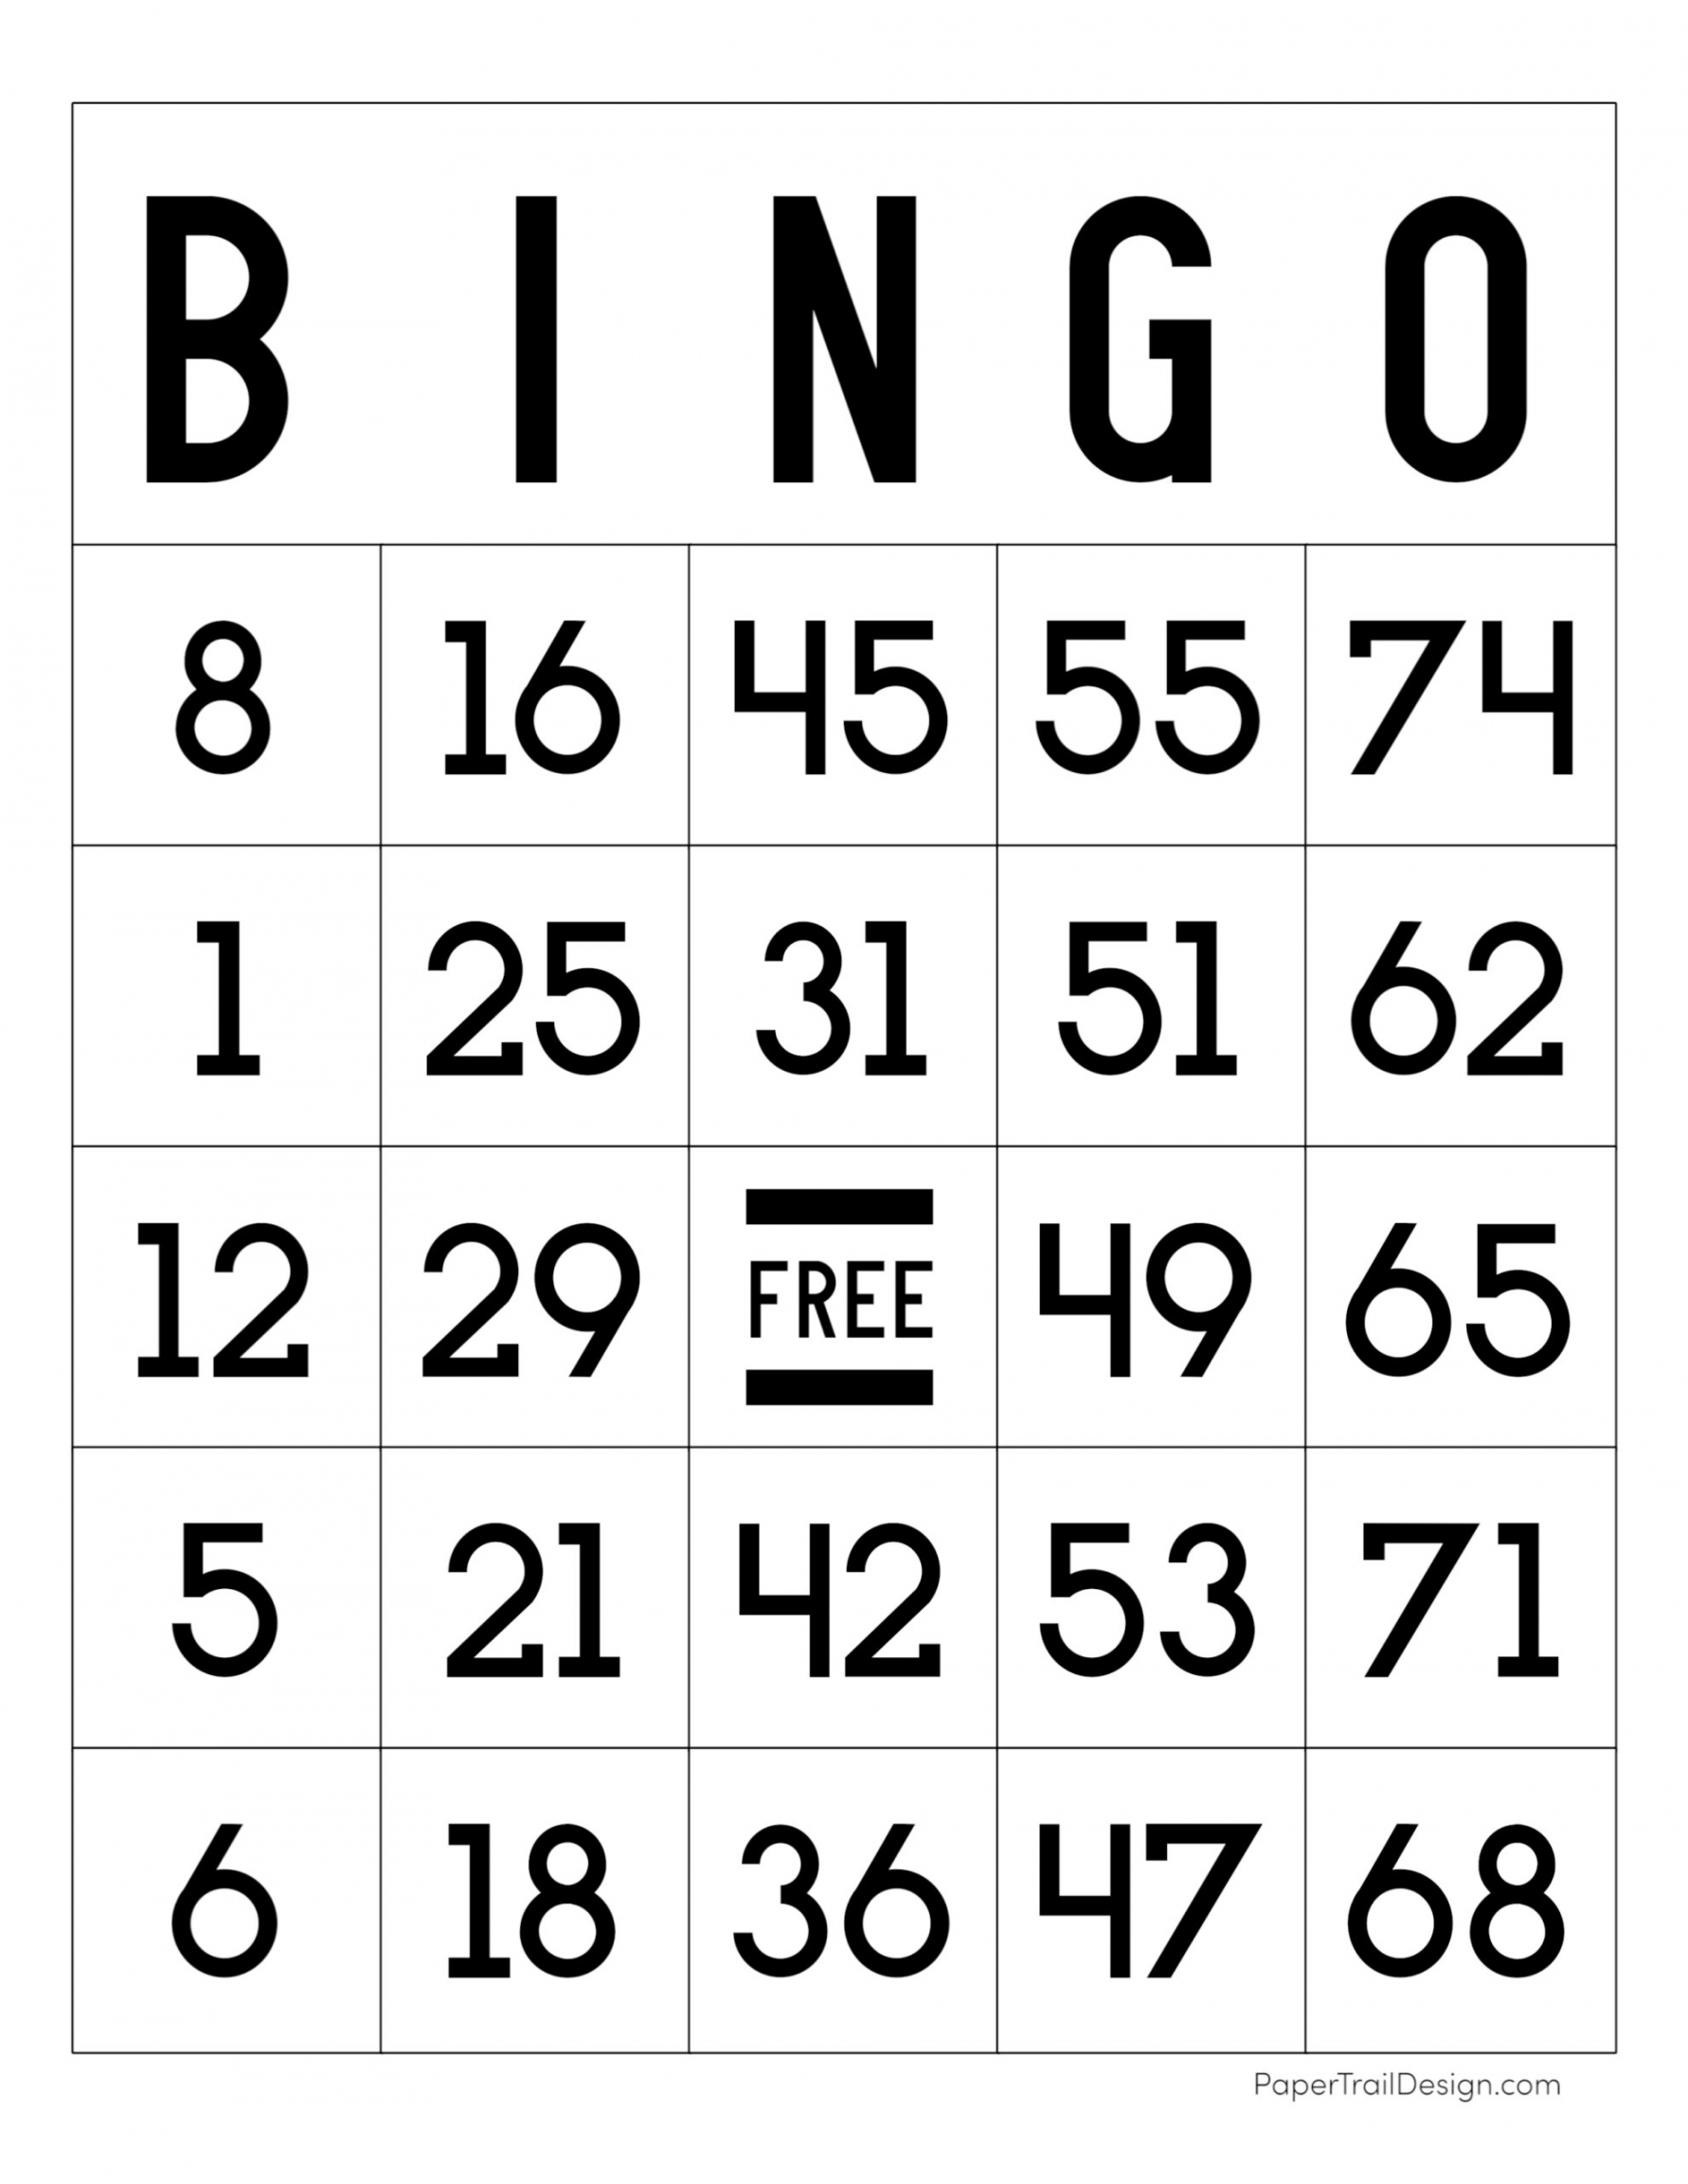 Bingo Card Printable Free - Printable - Free Printable Bingo Cards - Paper Trail Design